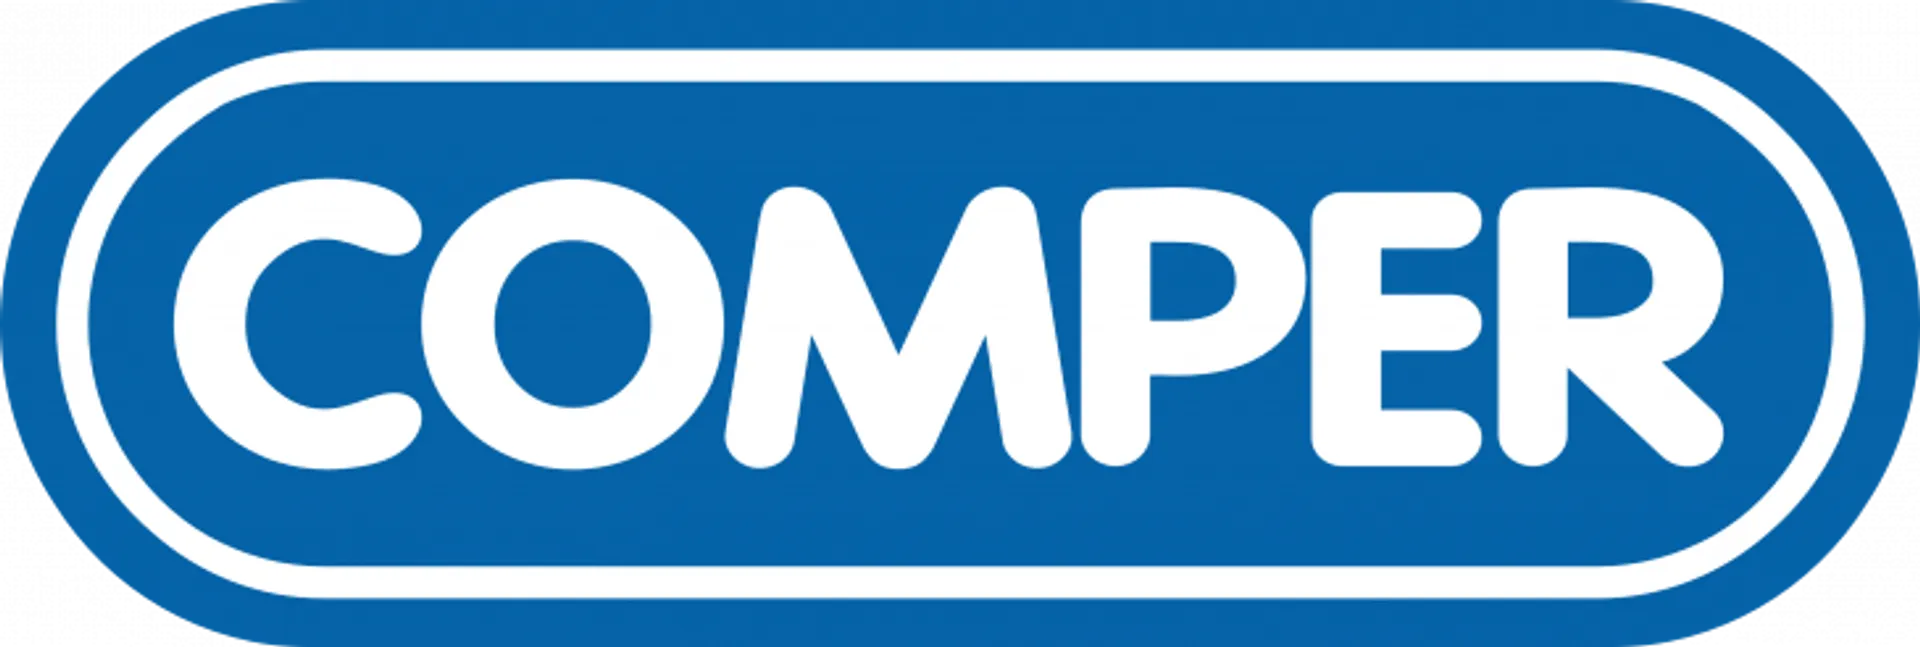 COMPER logo